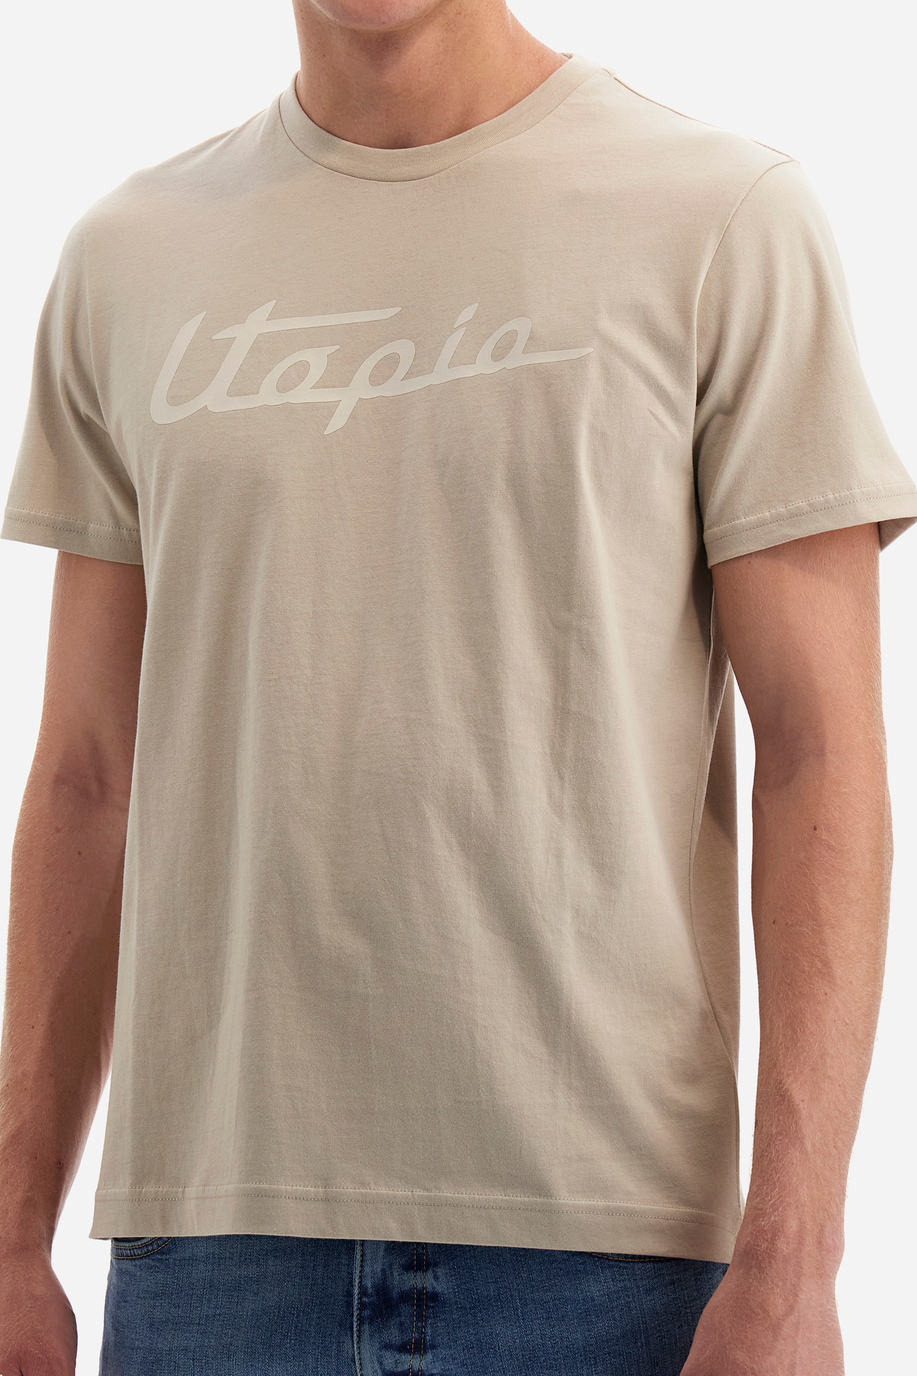 Regular-fit cotton T-shirt - Yongsun - Pagani by La Martina | La Martina - Official Online Shop